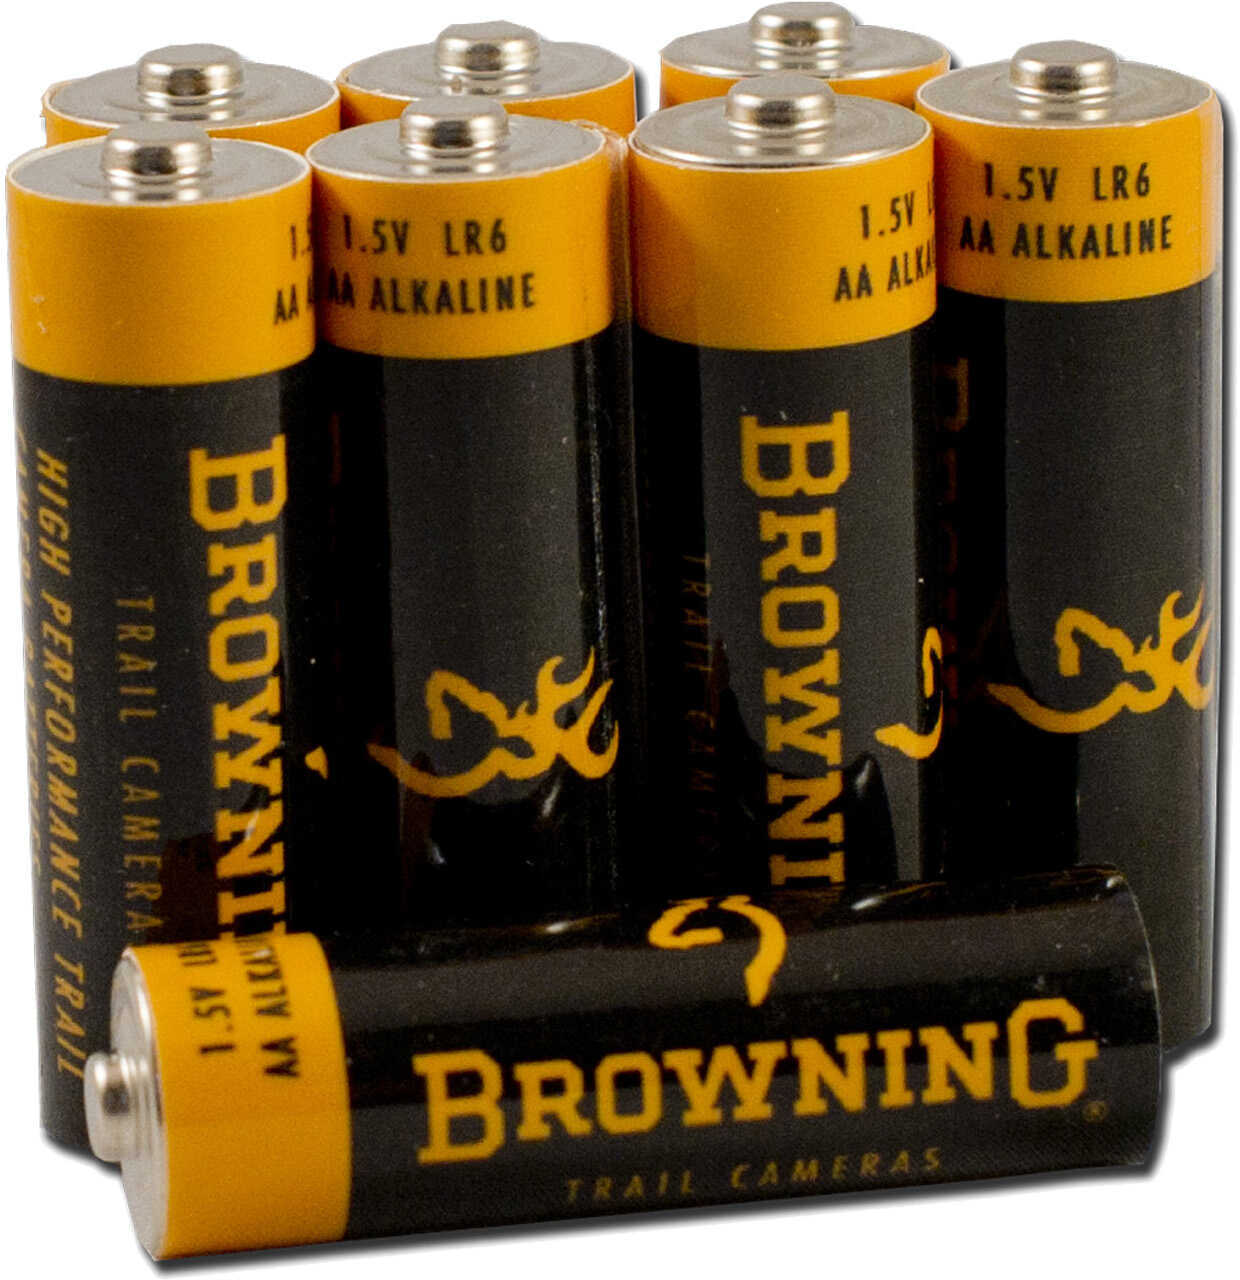 Browning BRWNING TRL Camera 8Pk AA Batteries